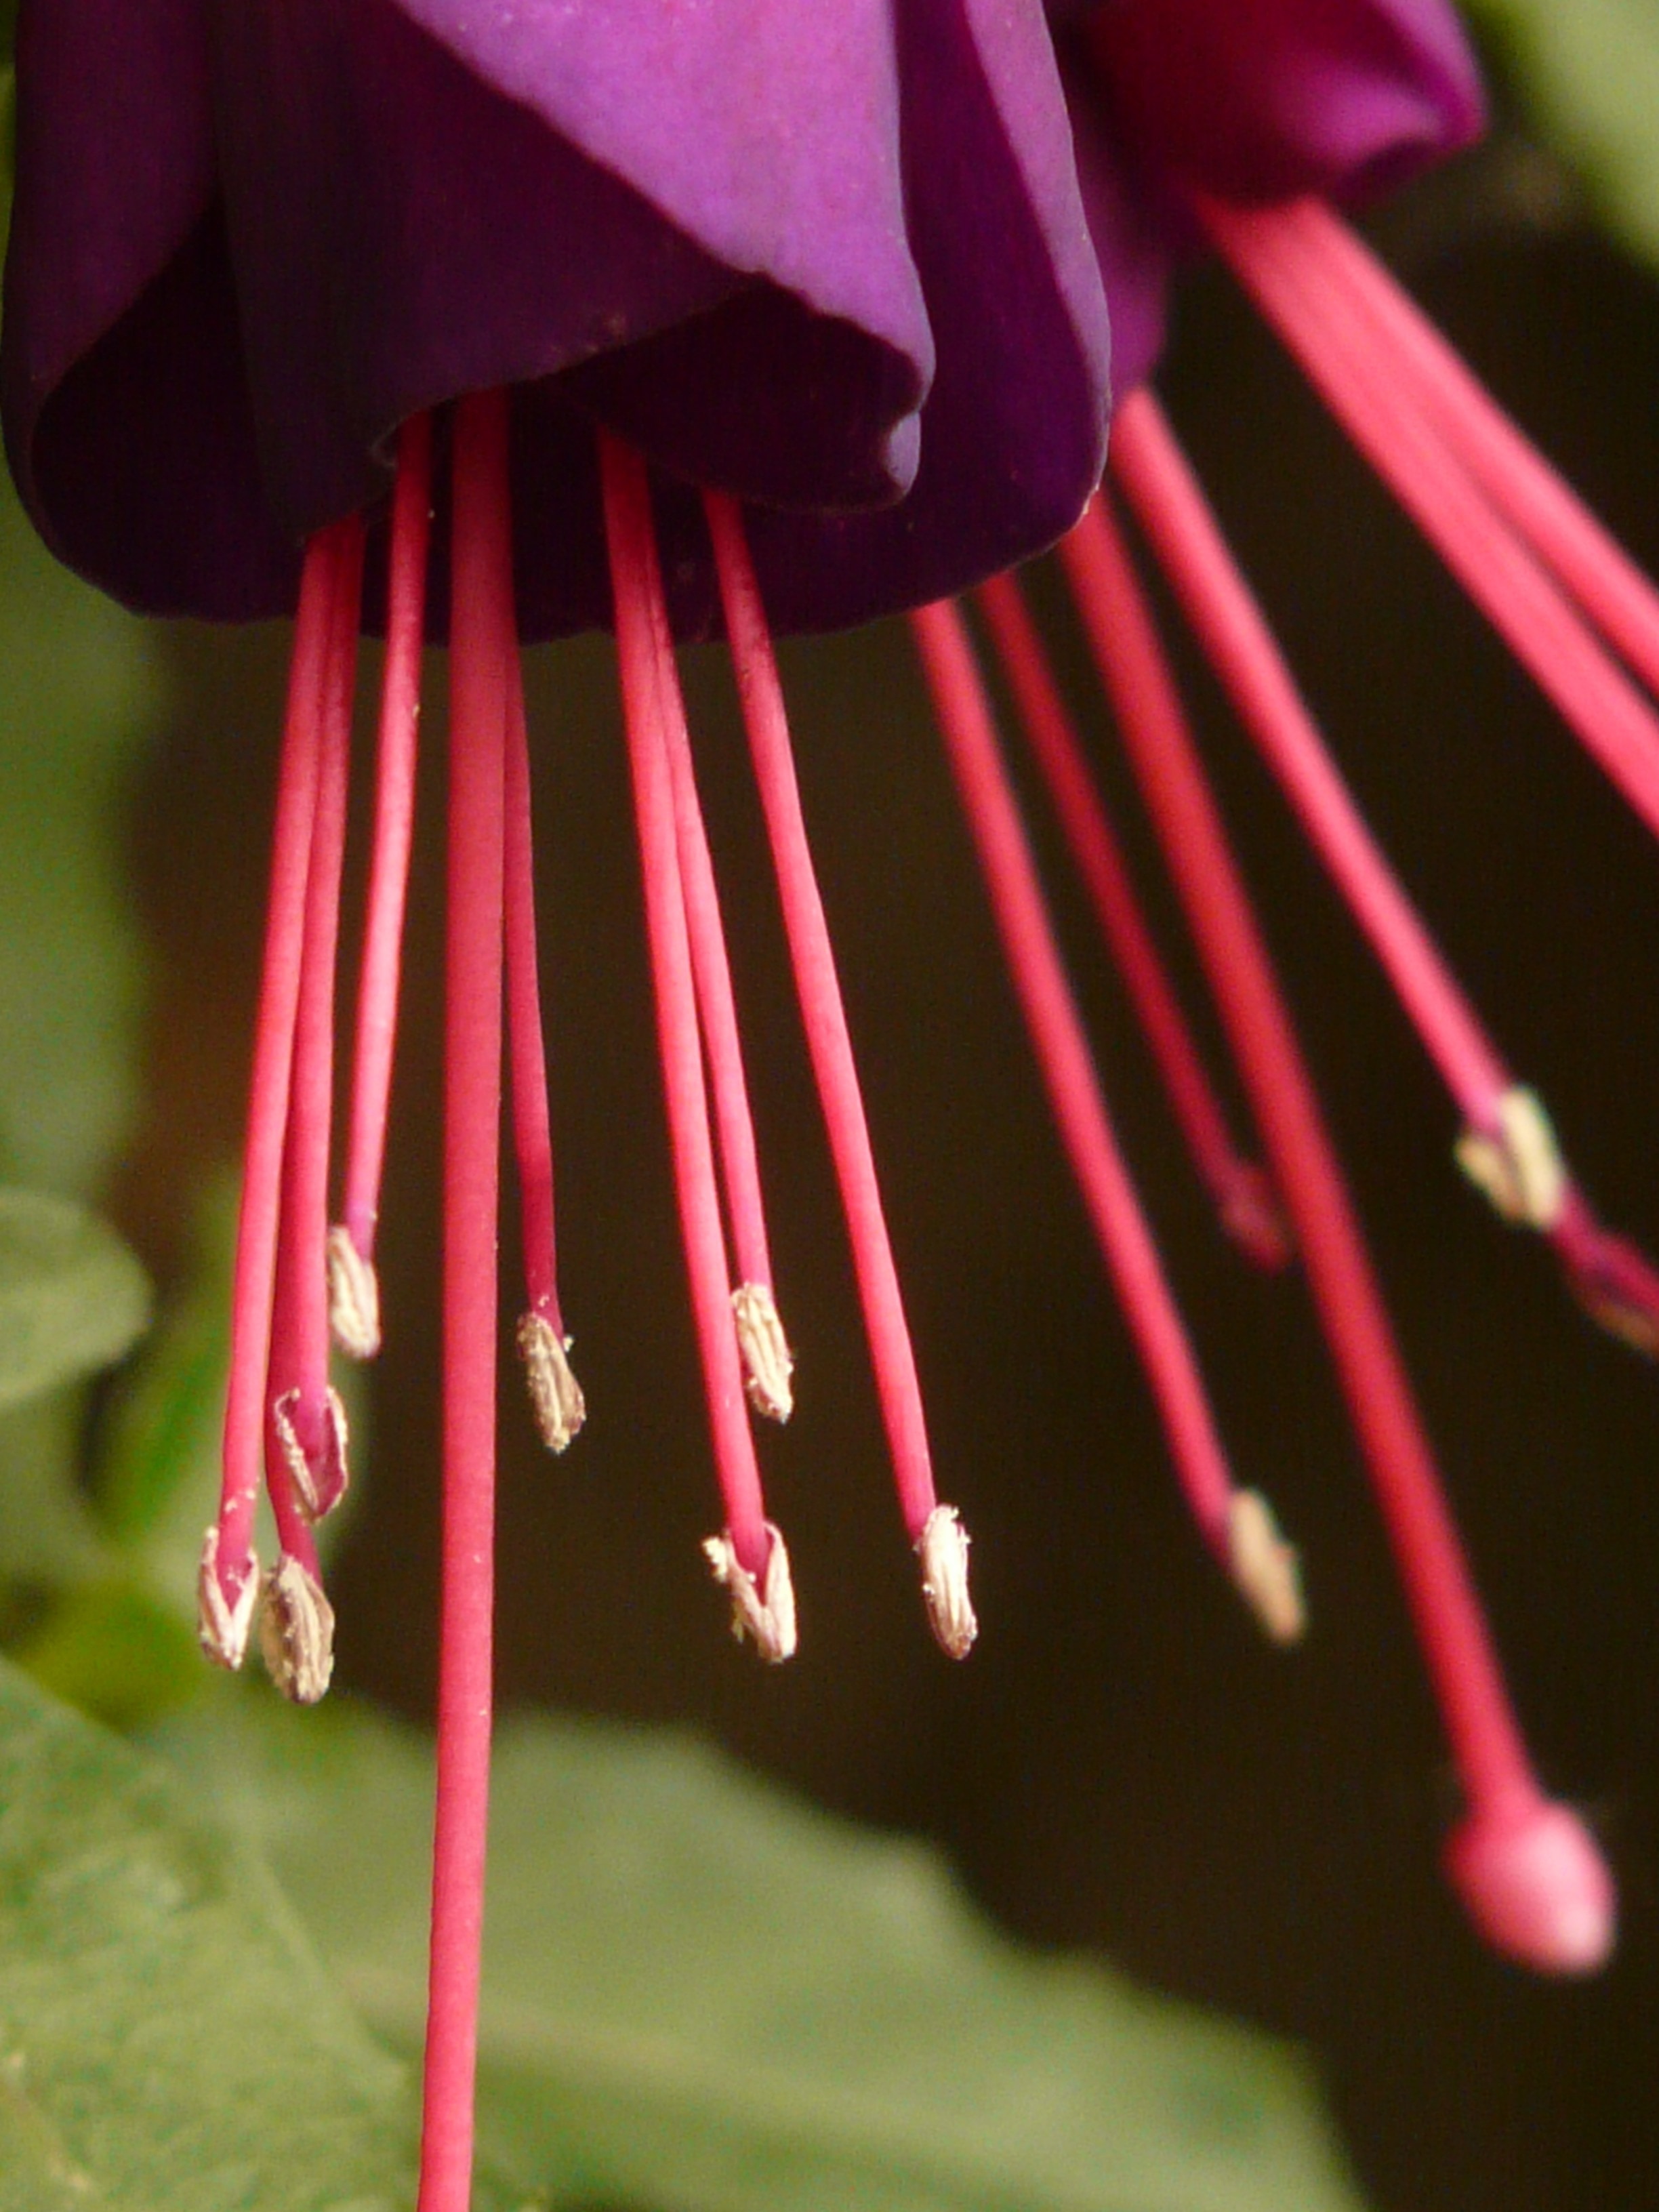 purple petaled flower in focus photography